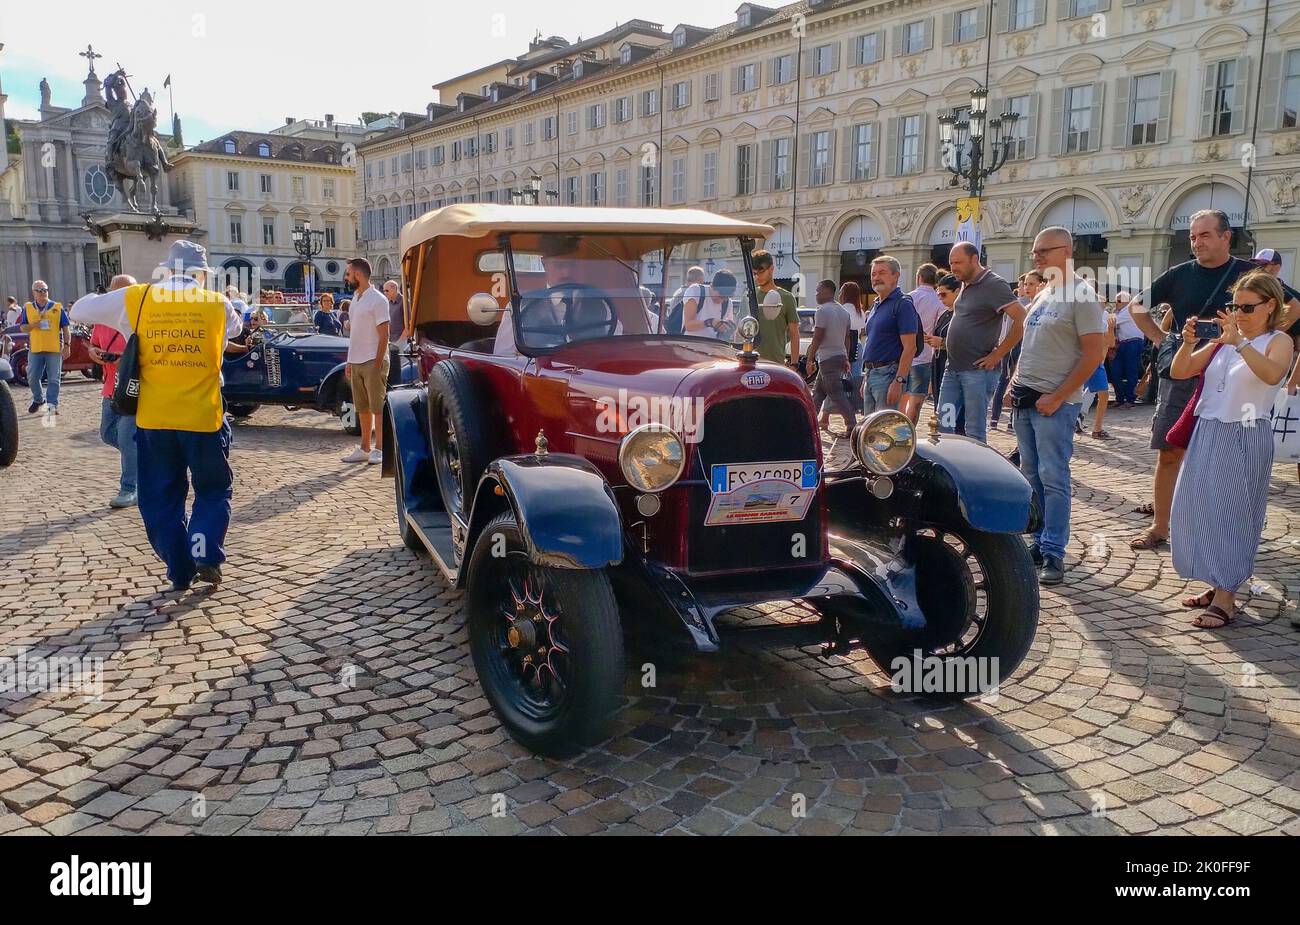 Italie Piémont Turin 'Autolook week Torino' parade de voiture historique crédit: Realy Easy Star/Alay Live News Banque D'Images